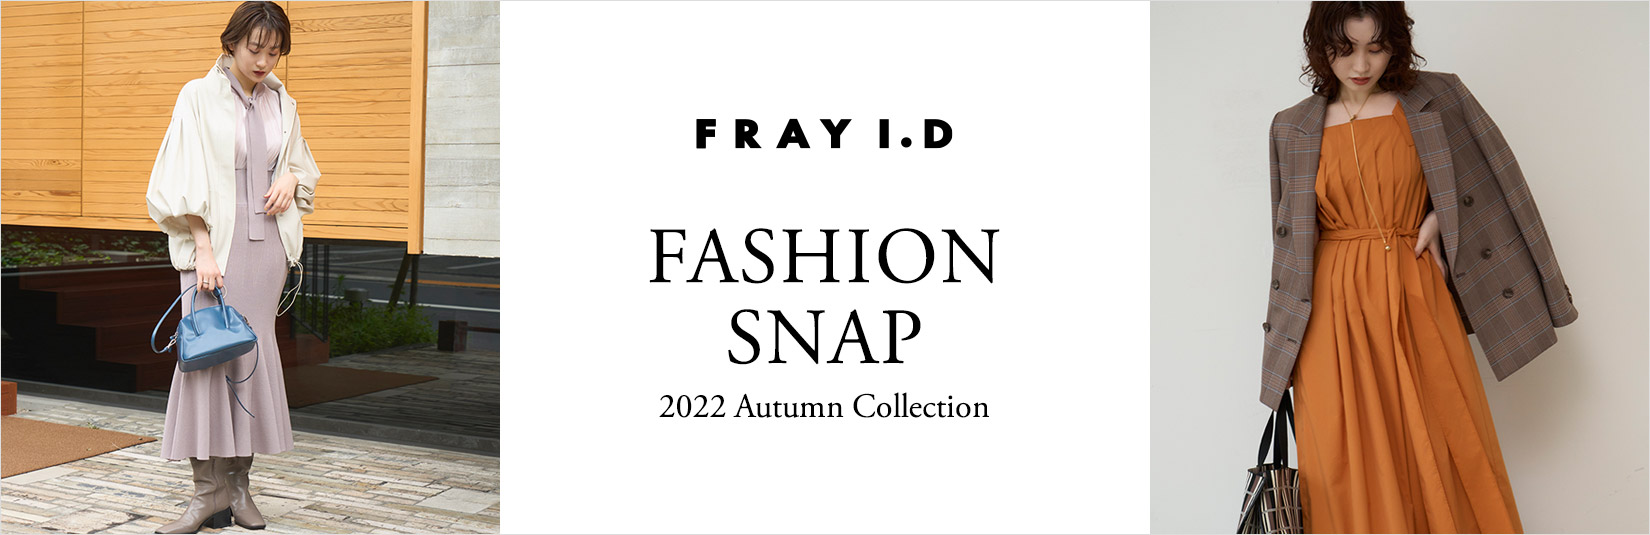 Fashion Snap -2022 Autumn Collection-